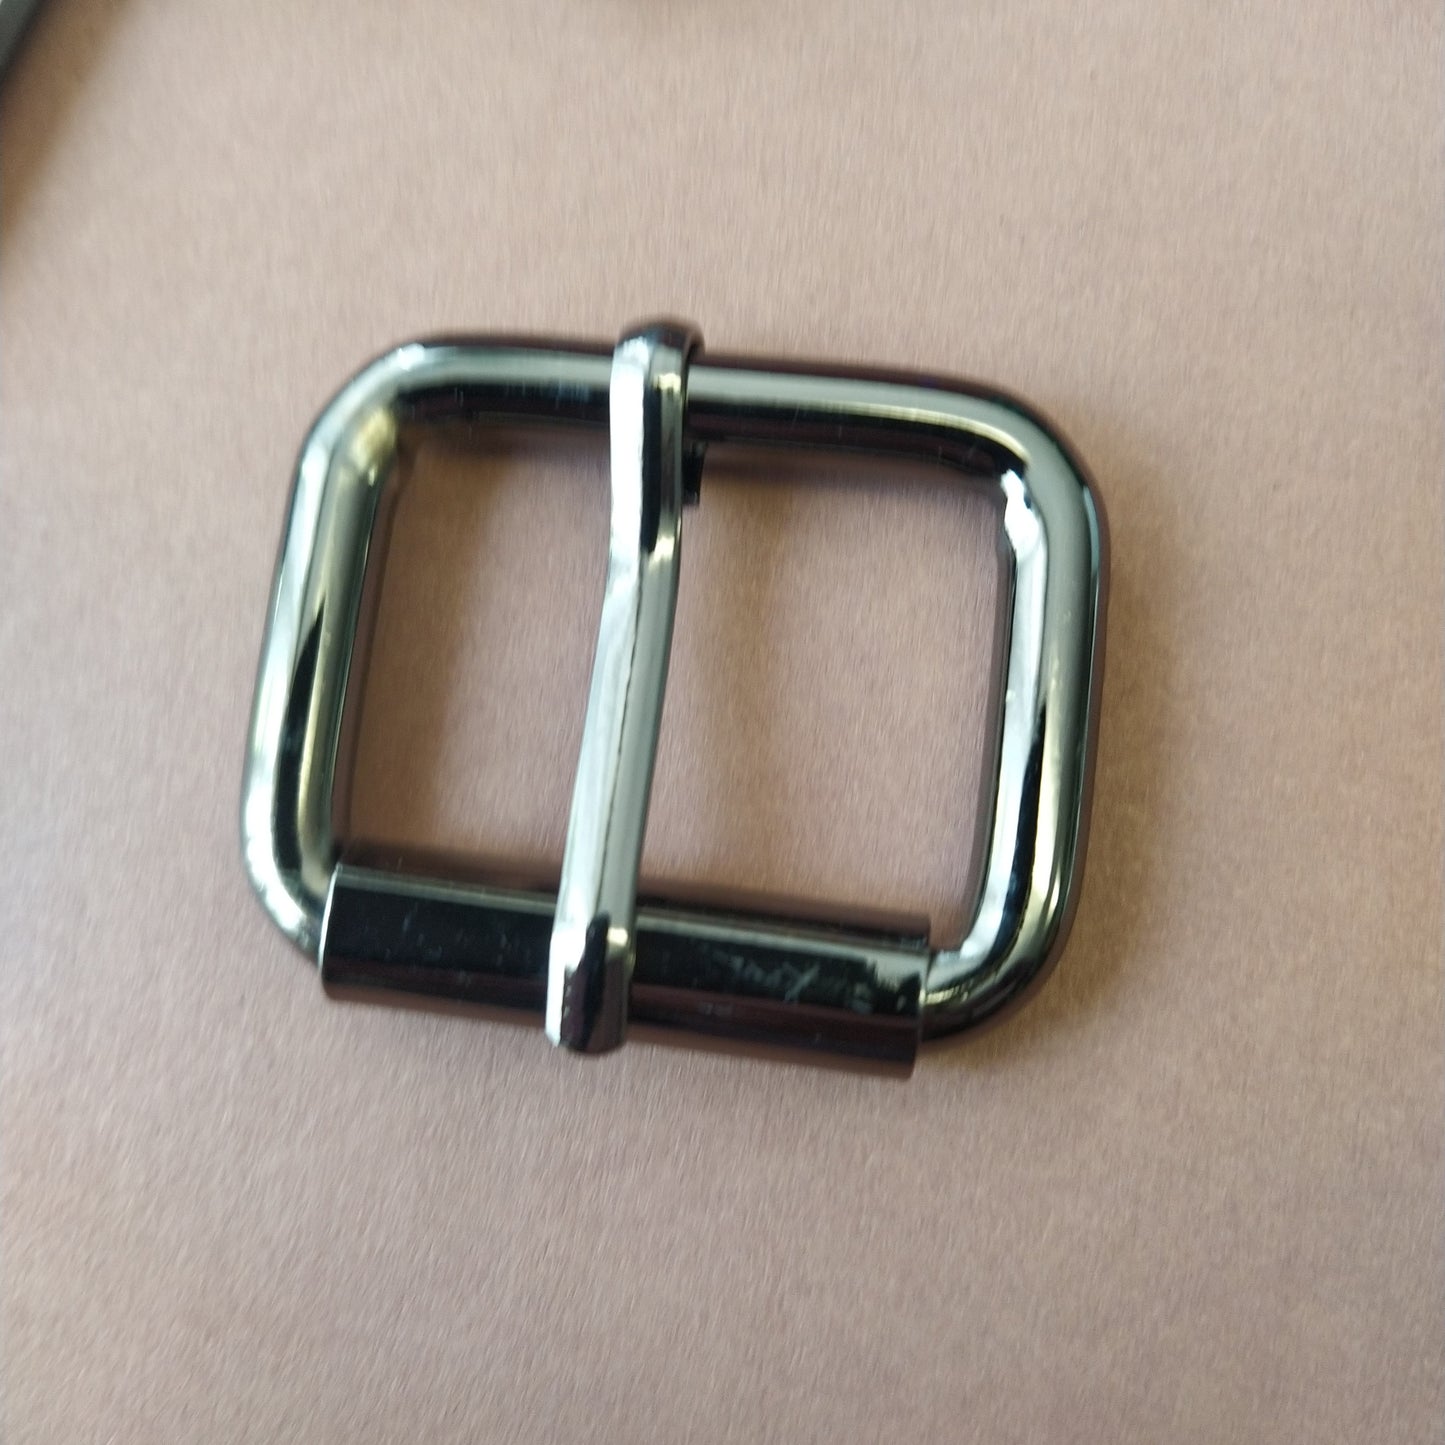 Belt buckle 3.3 x 2.4 cm